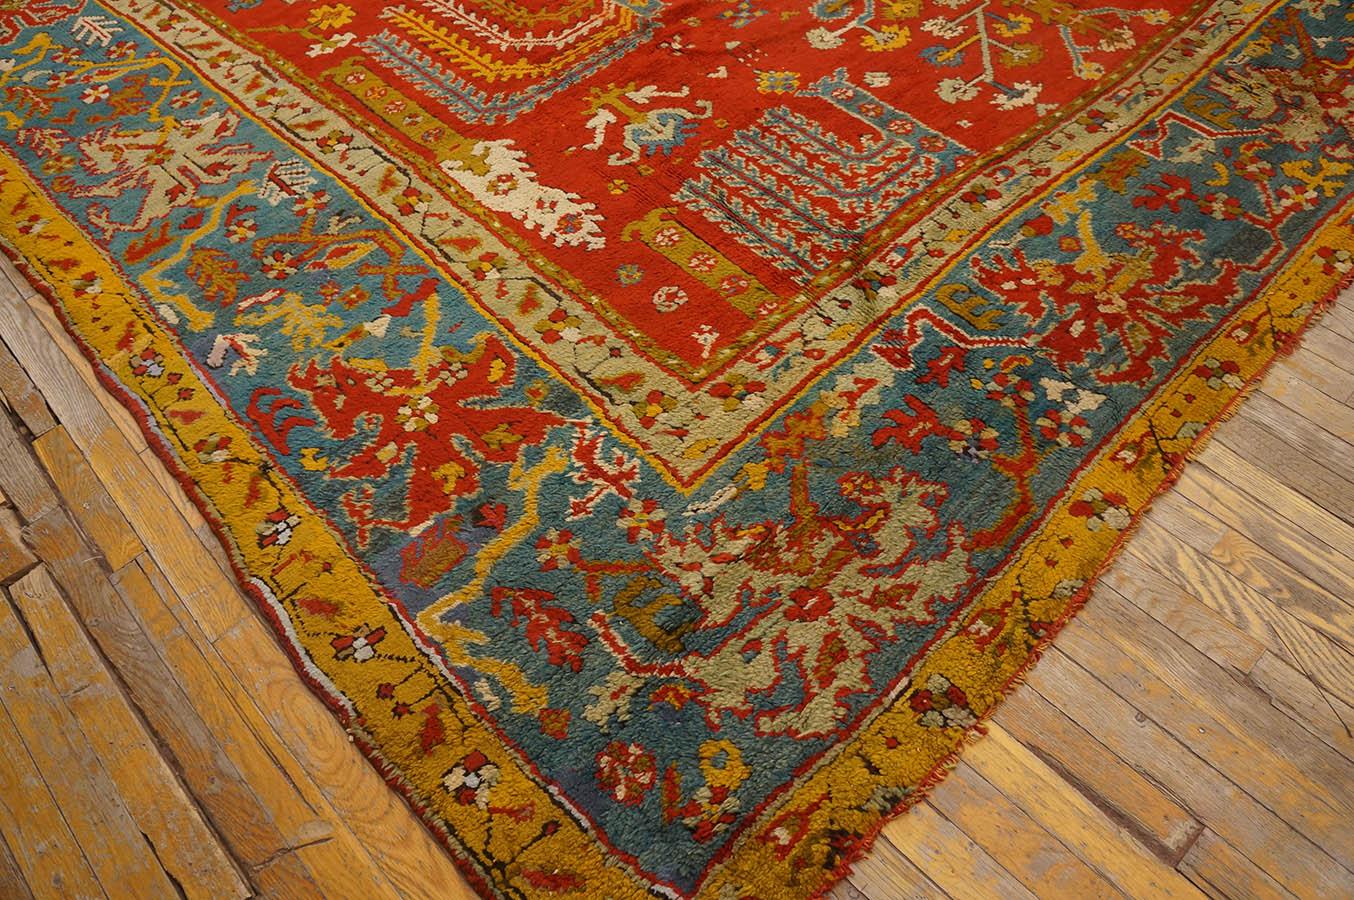 Late 19th Century Turkish Oushak Carpet  ( 11' 5'' x 14' 6'' - 348 x 442 cm ) For Sale 12